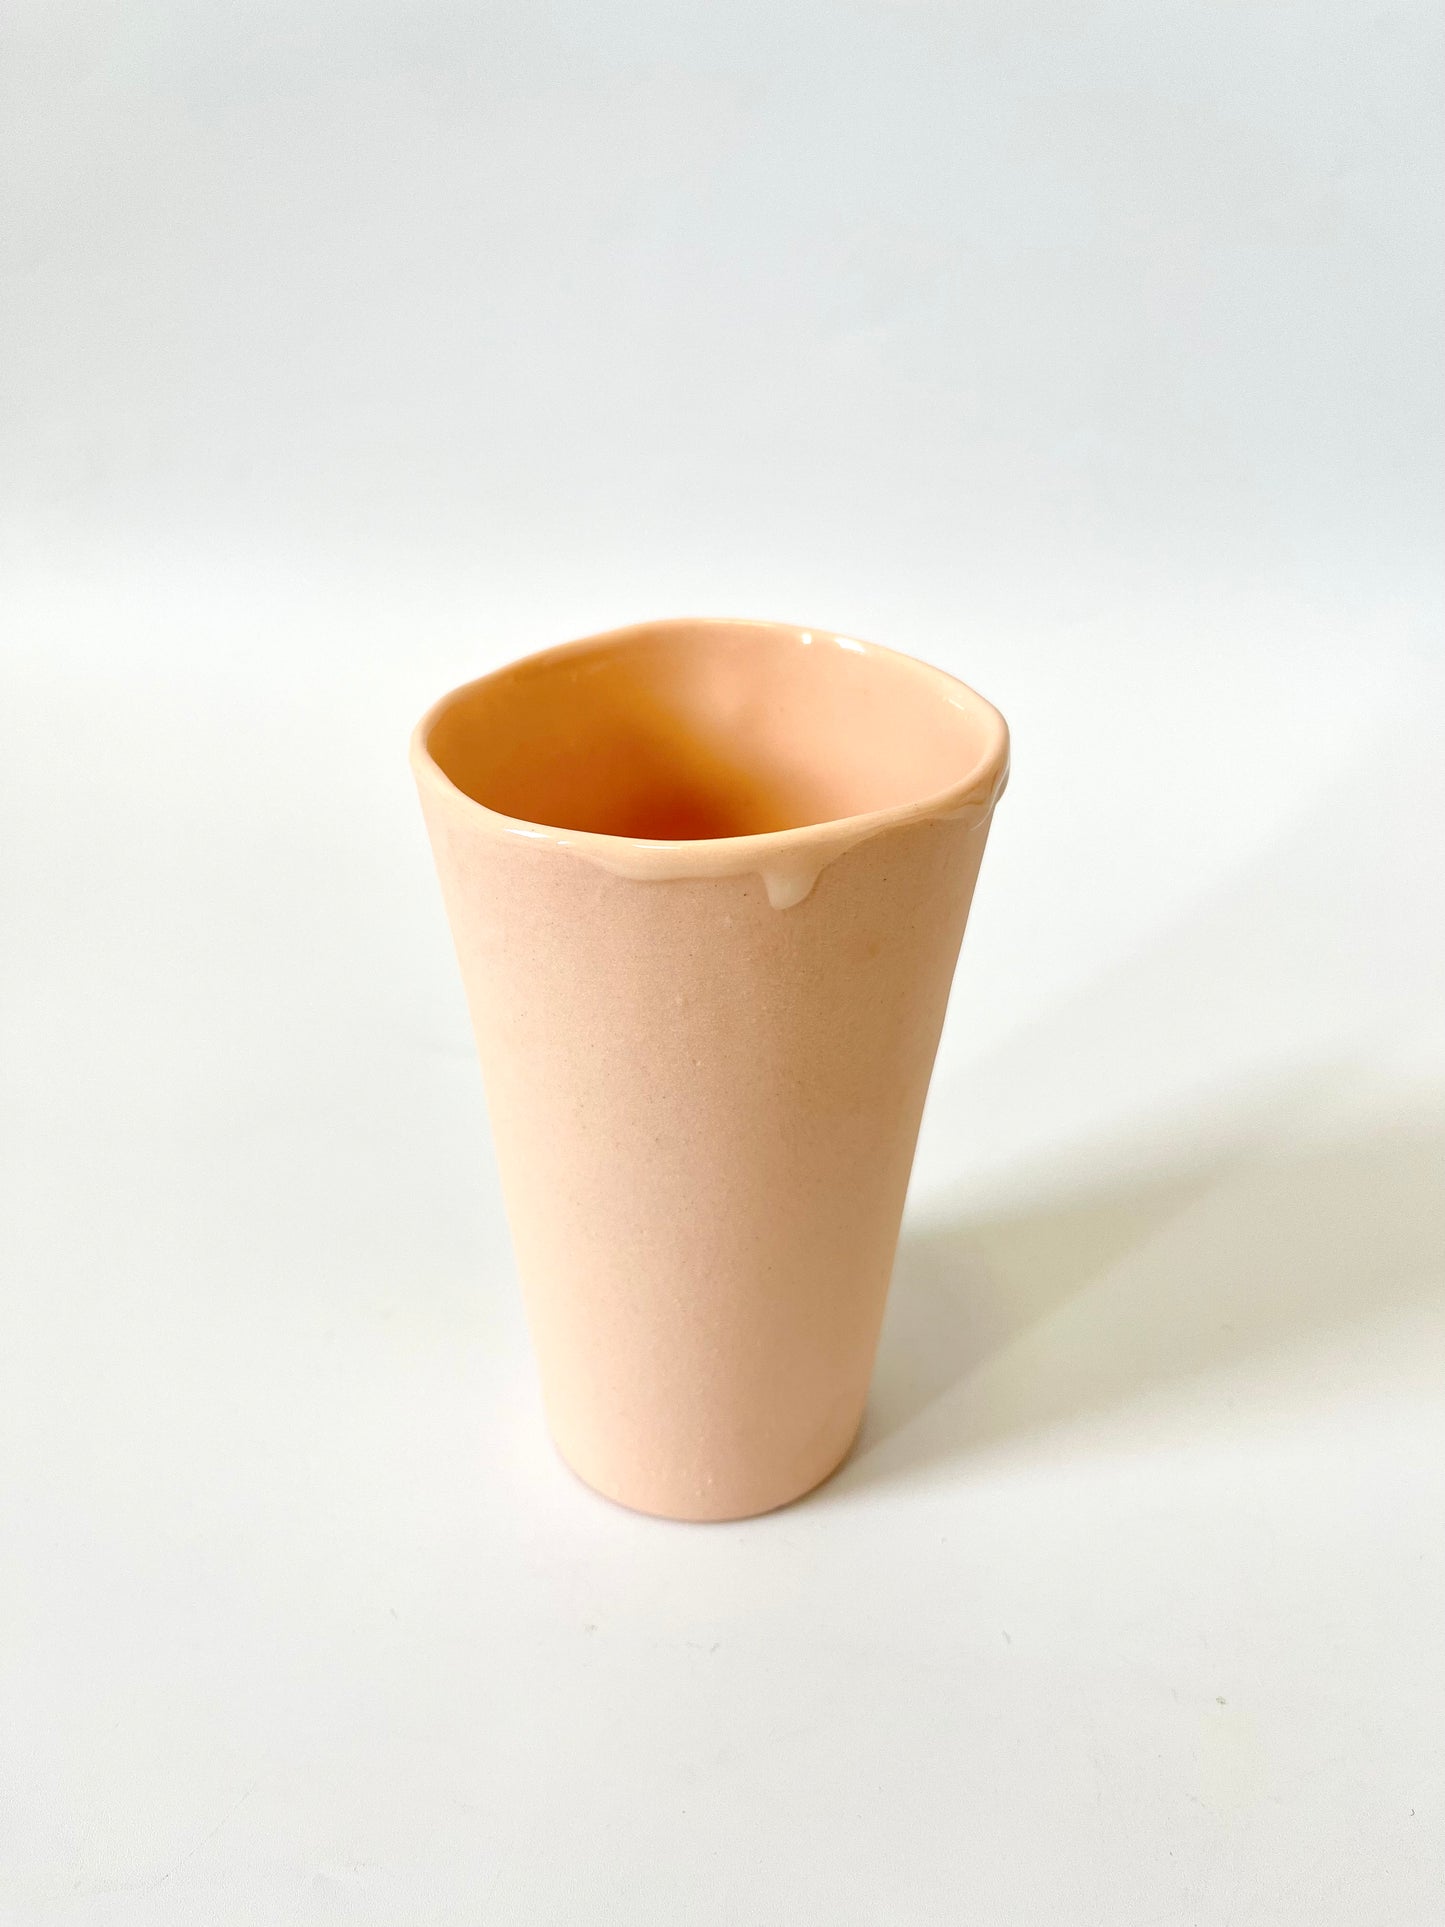 Coral Vessel - One of a Kind Ceramic - Medium 8 x12cm